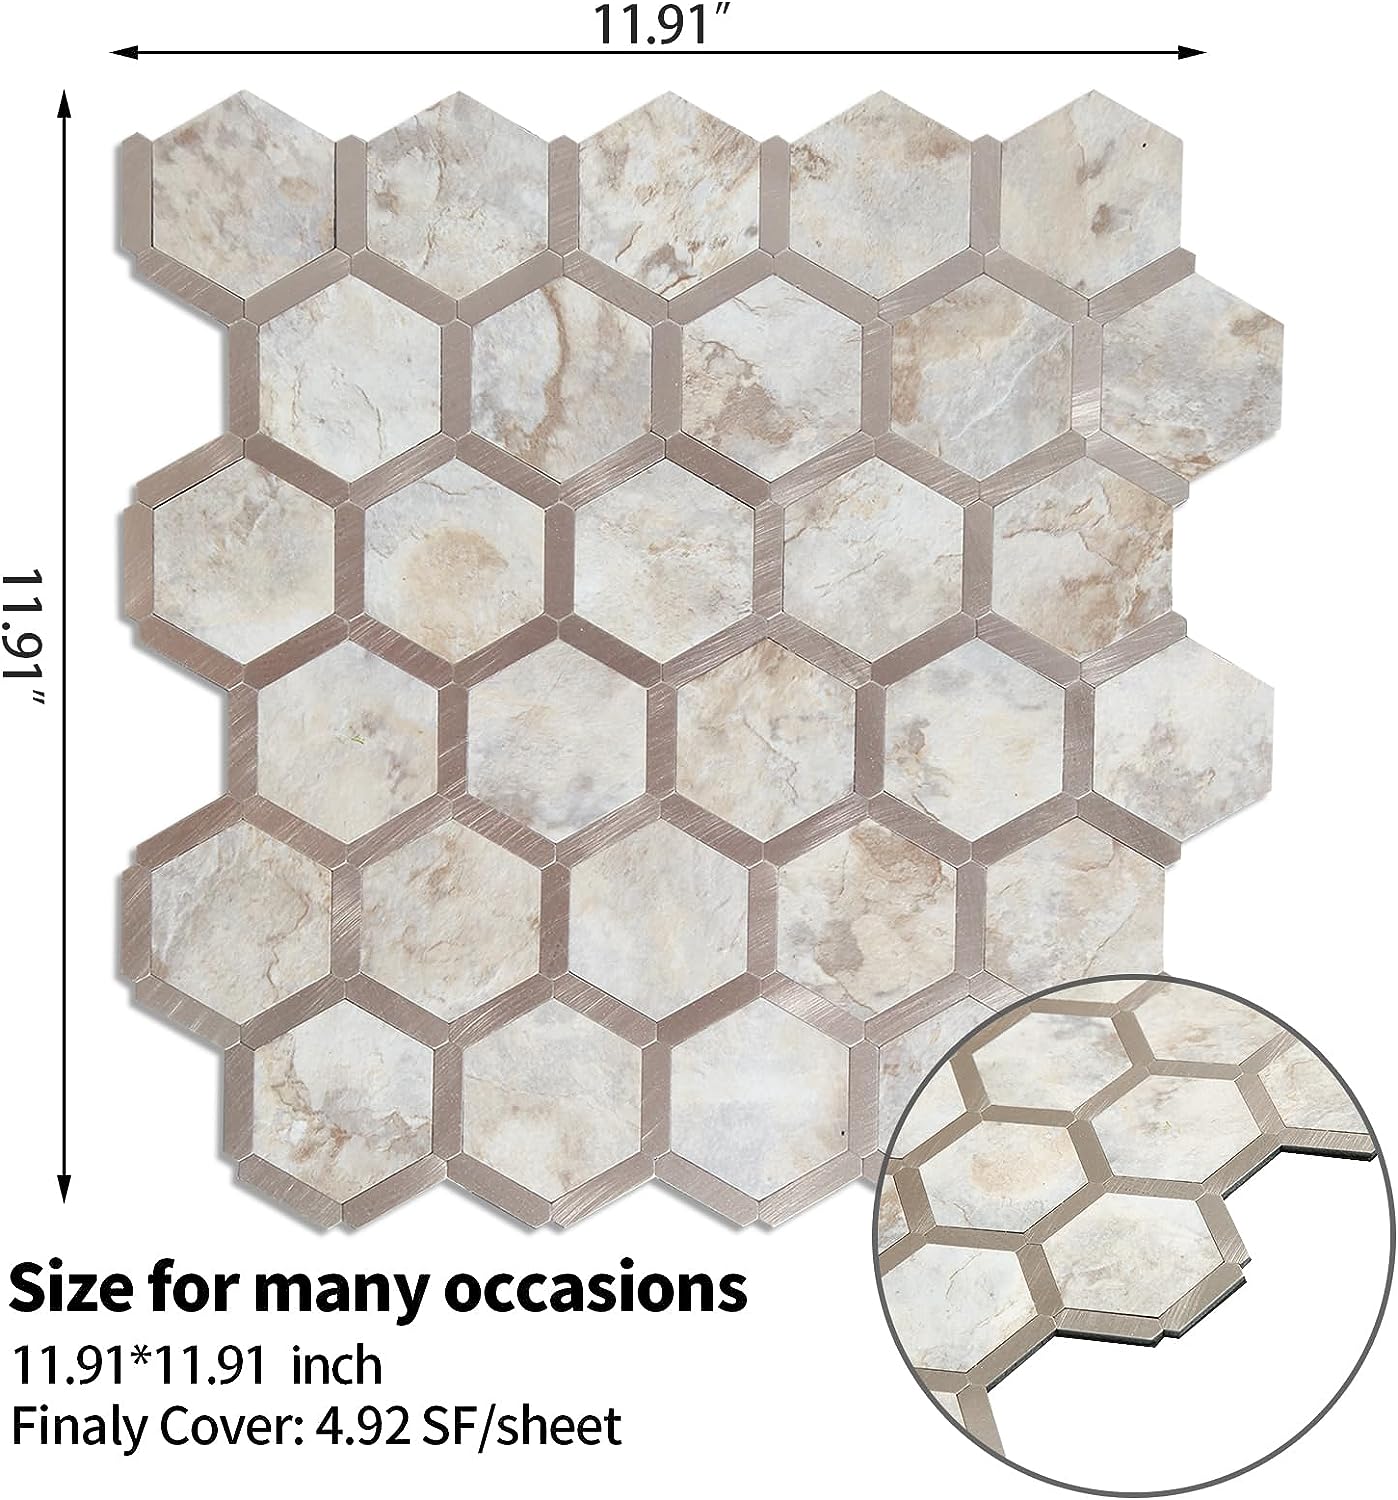 Hexagon metal stone blend  backsplash tiles for kitchen in Ecru with Gold lifestyle image